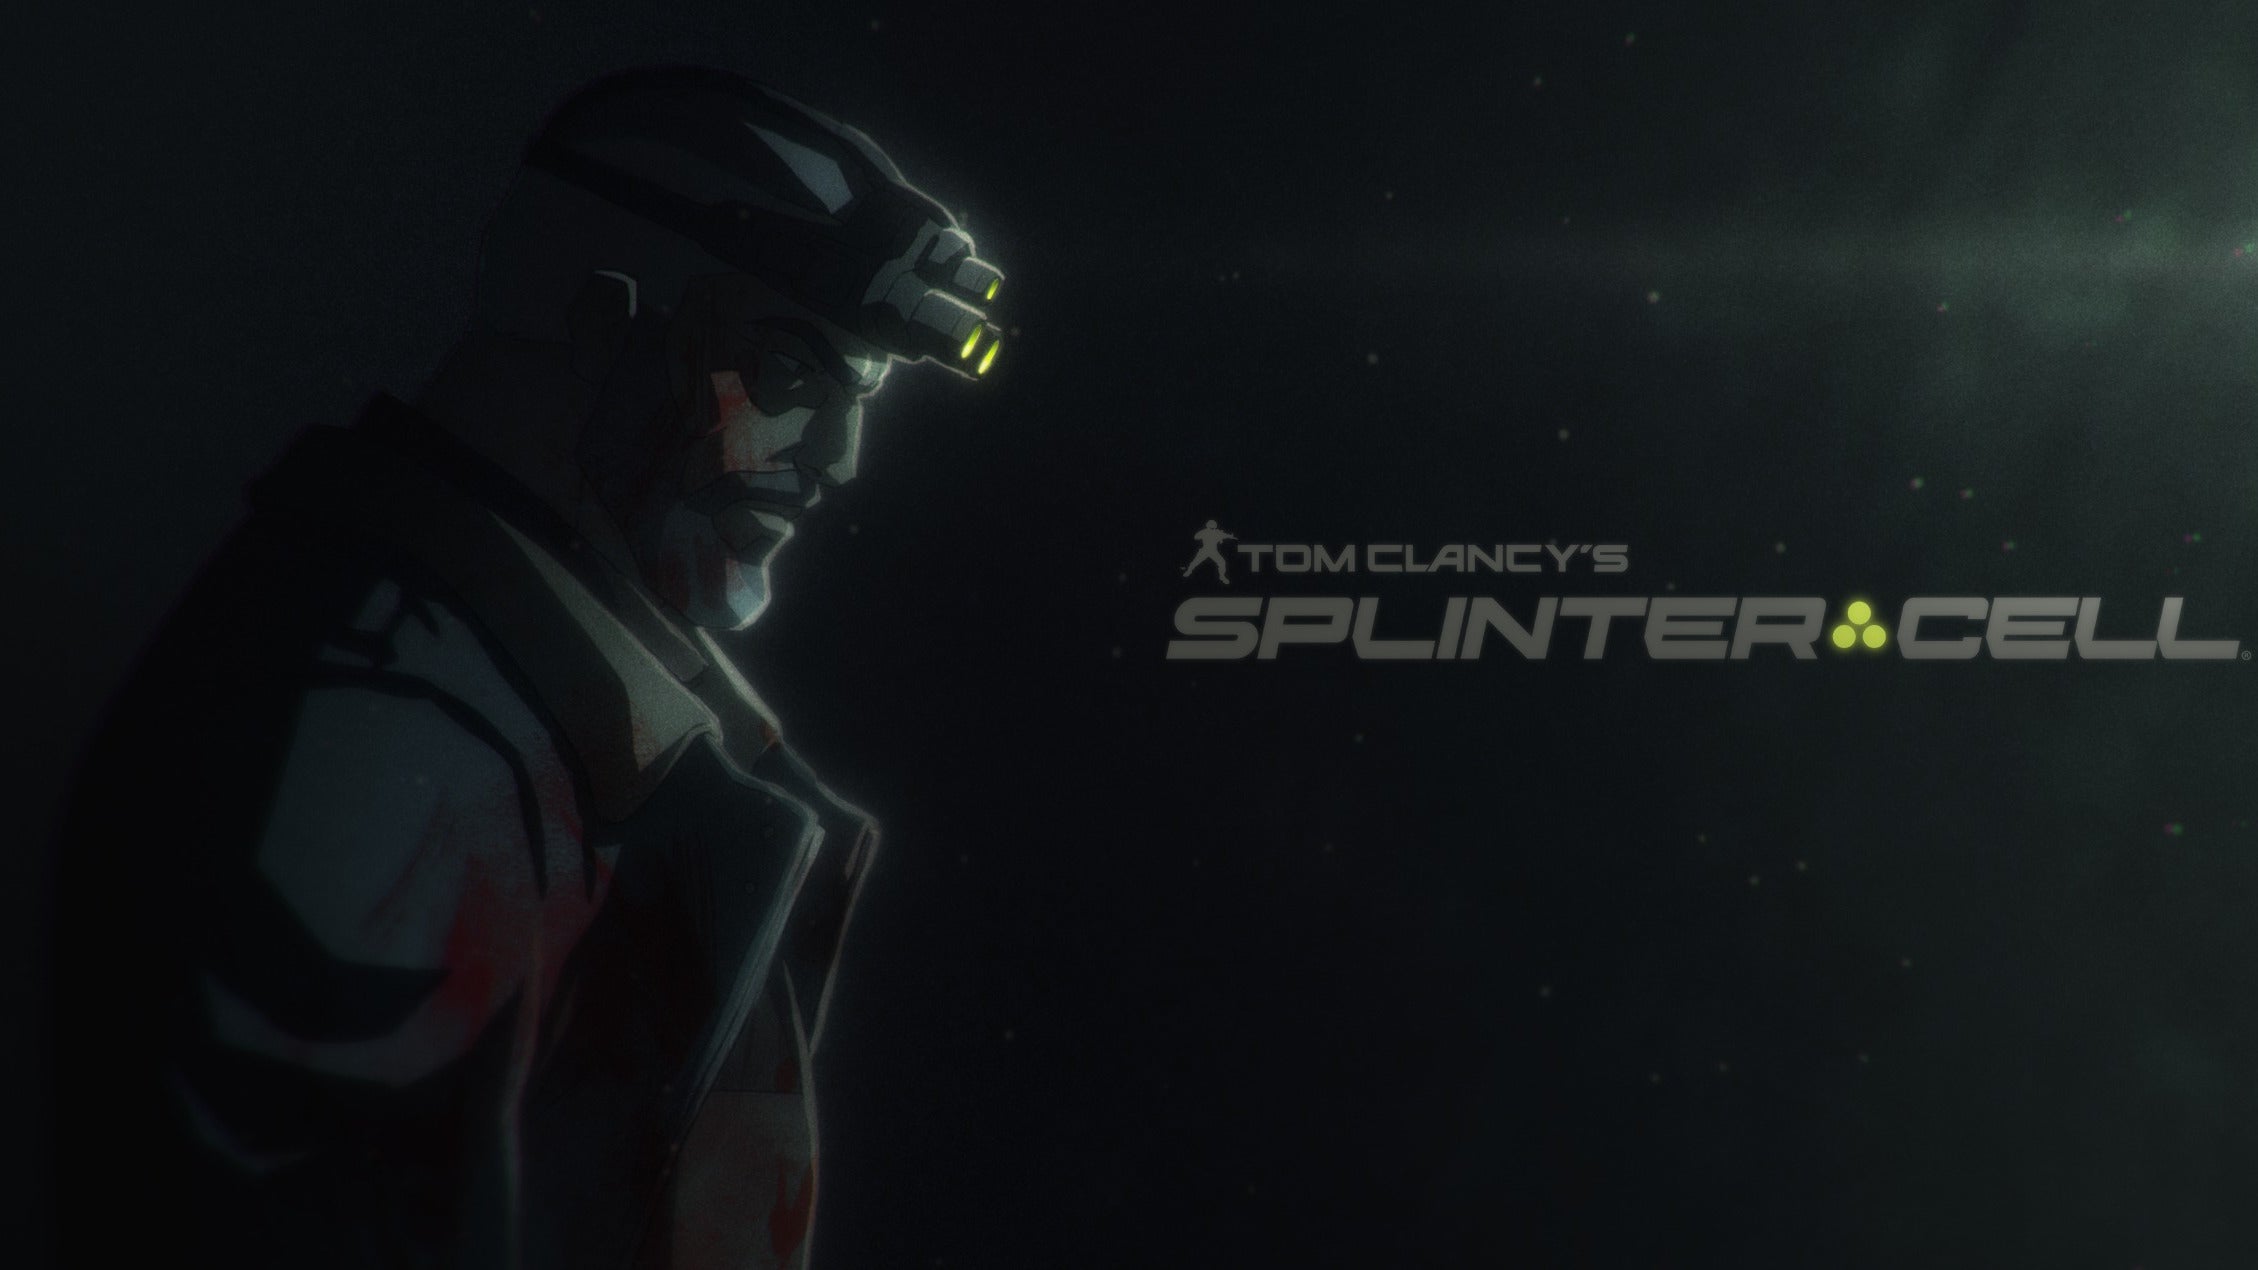 Artwork for Netflix's Splinter Cell animated series.